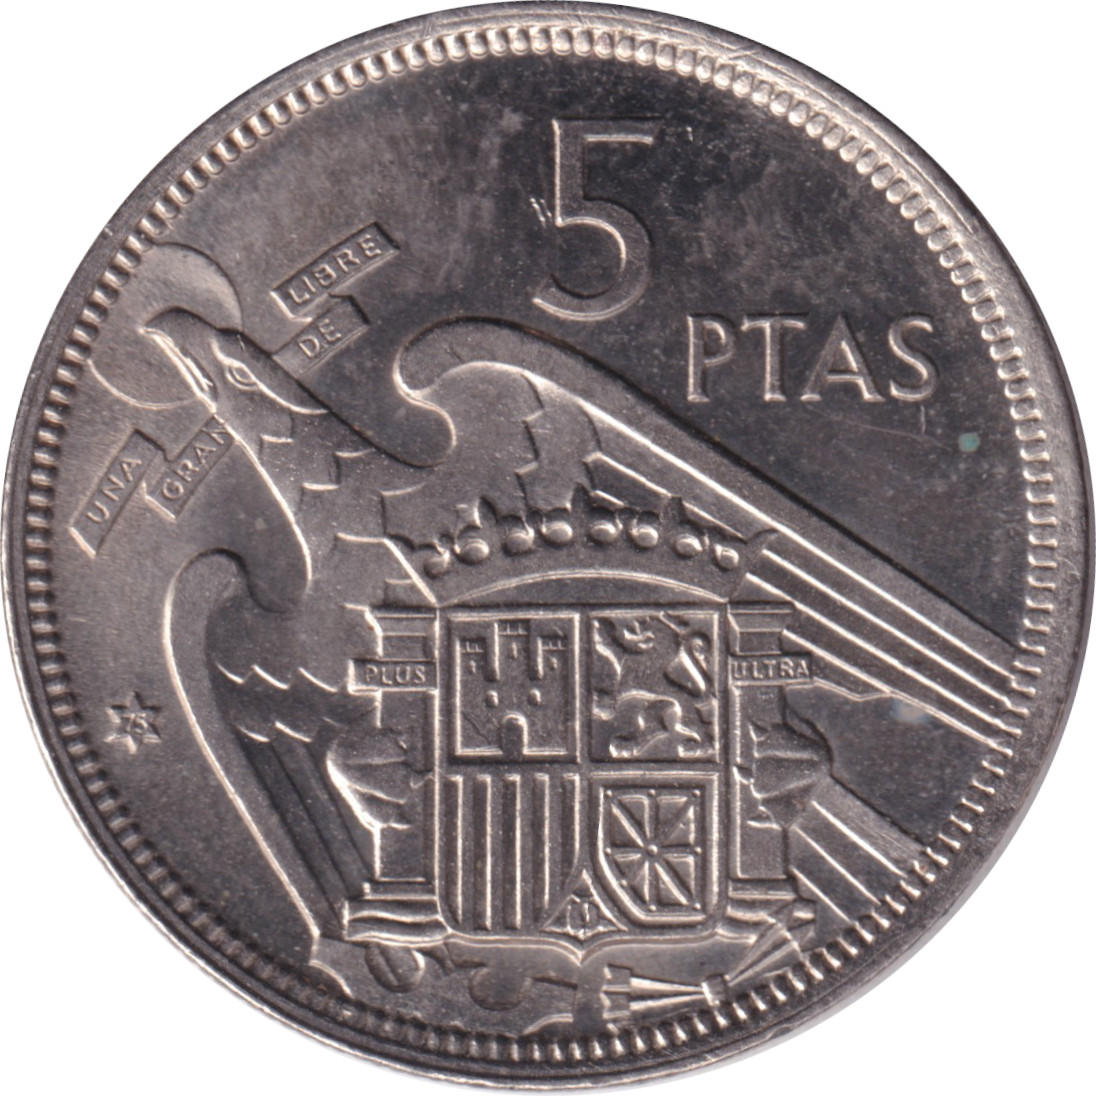 5 pesetas - Franco - Eagle